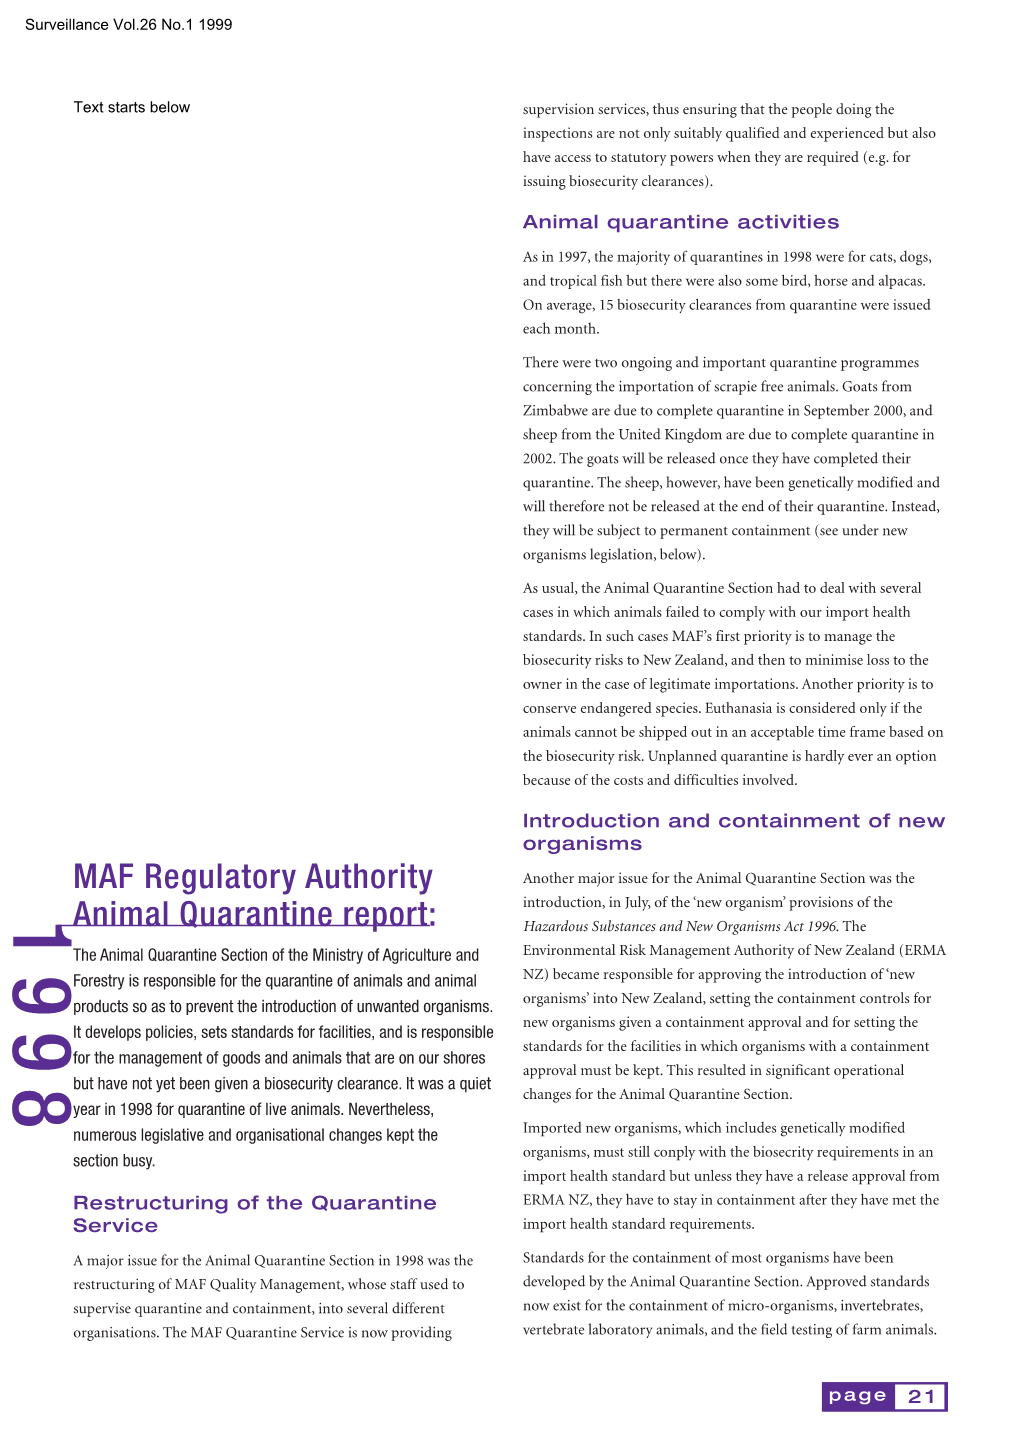 MAF Regulatory Authority Animal Quarantine Report